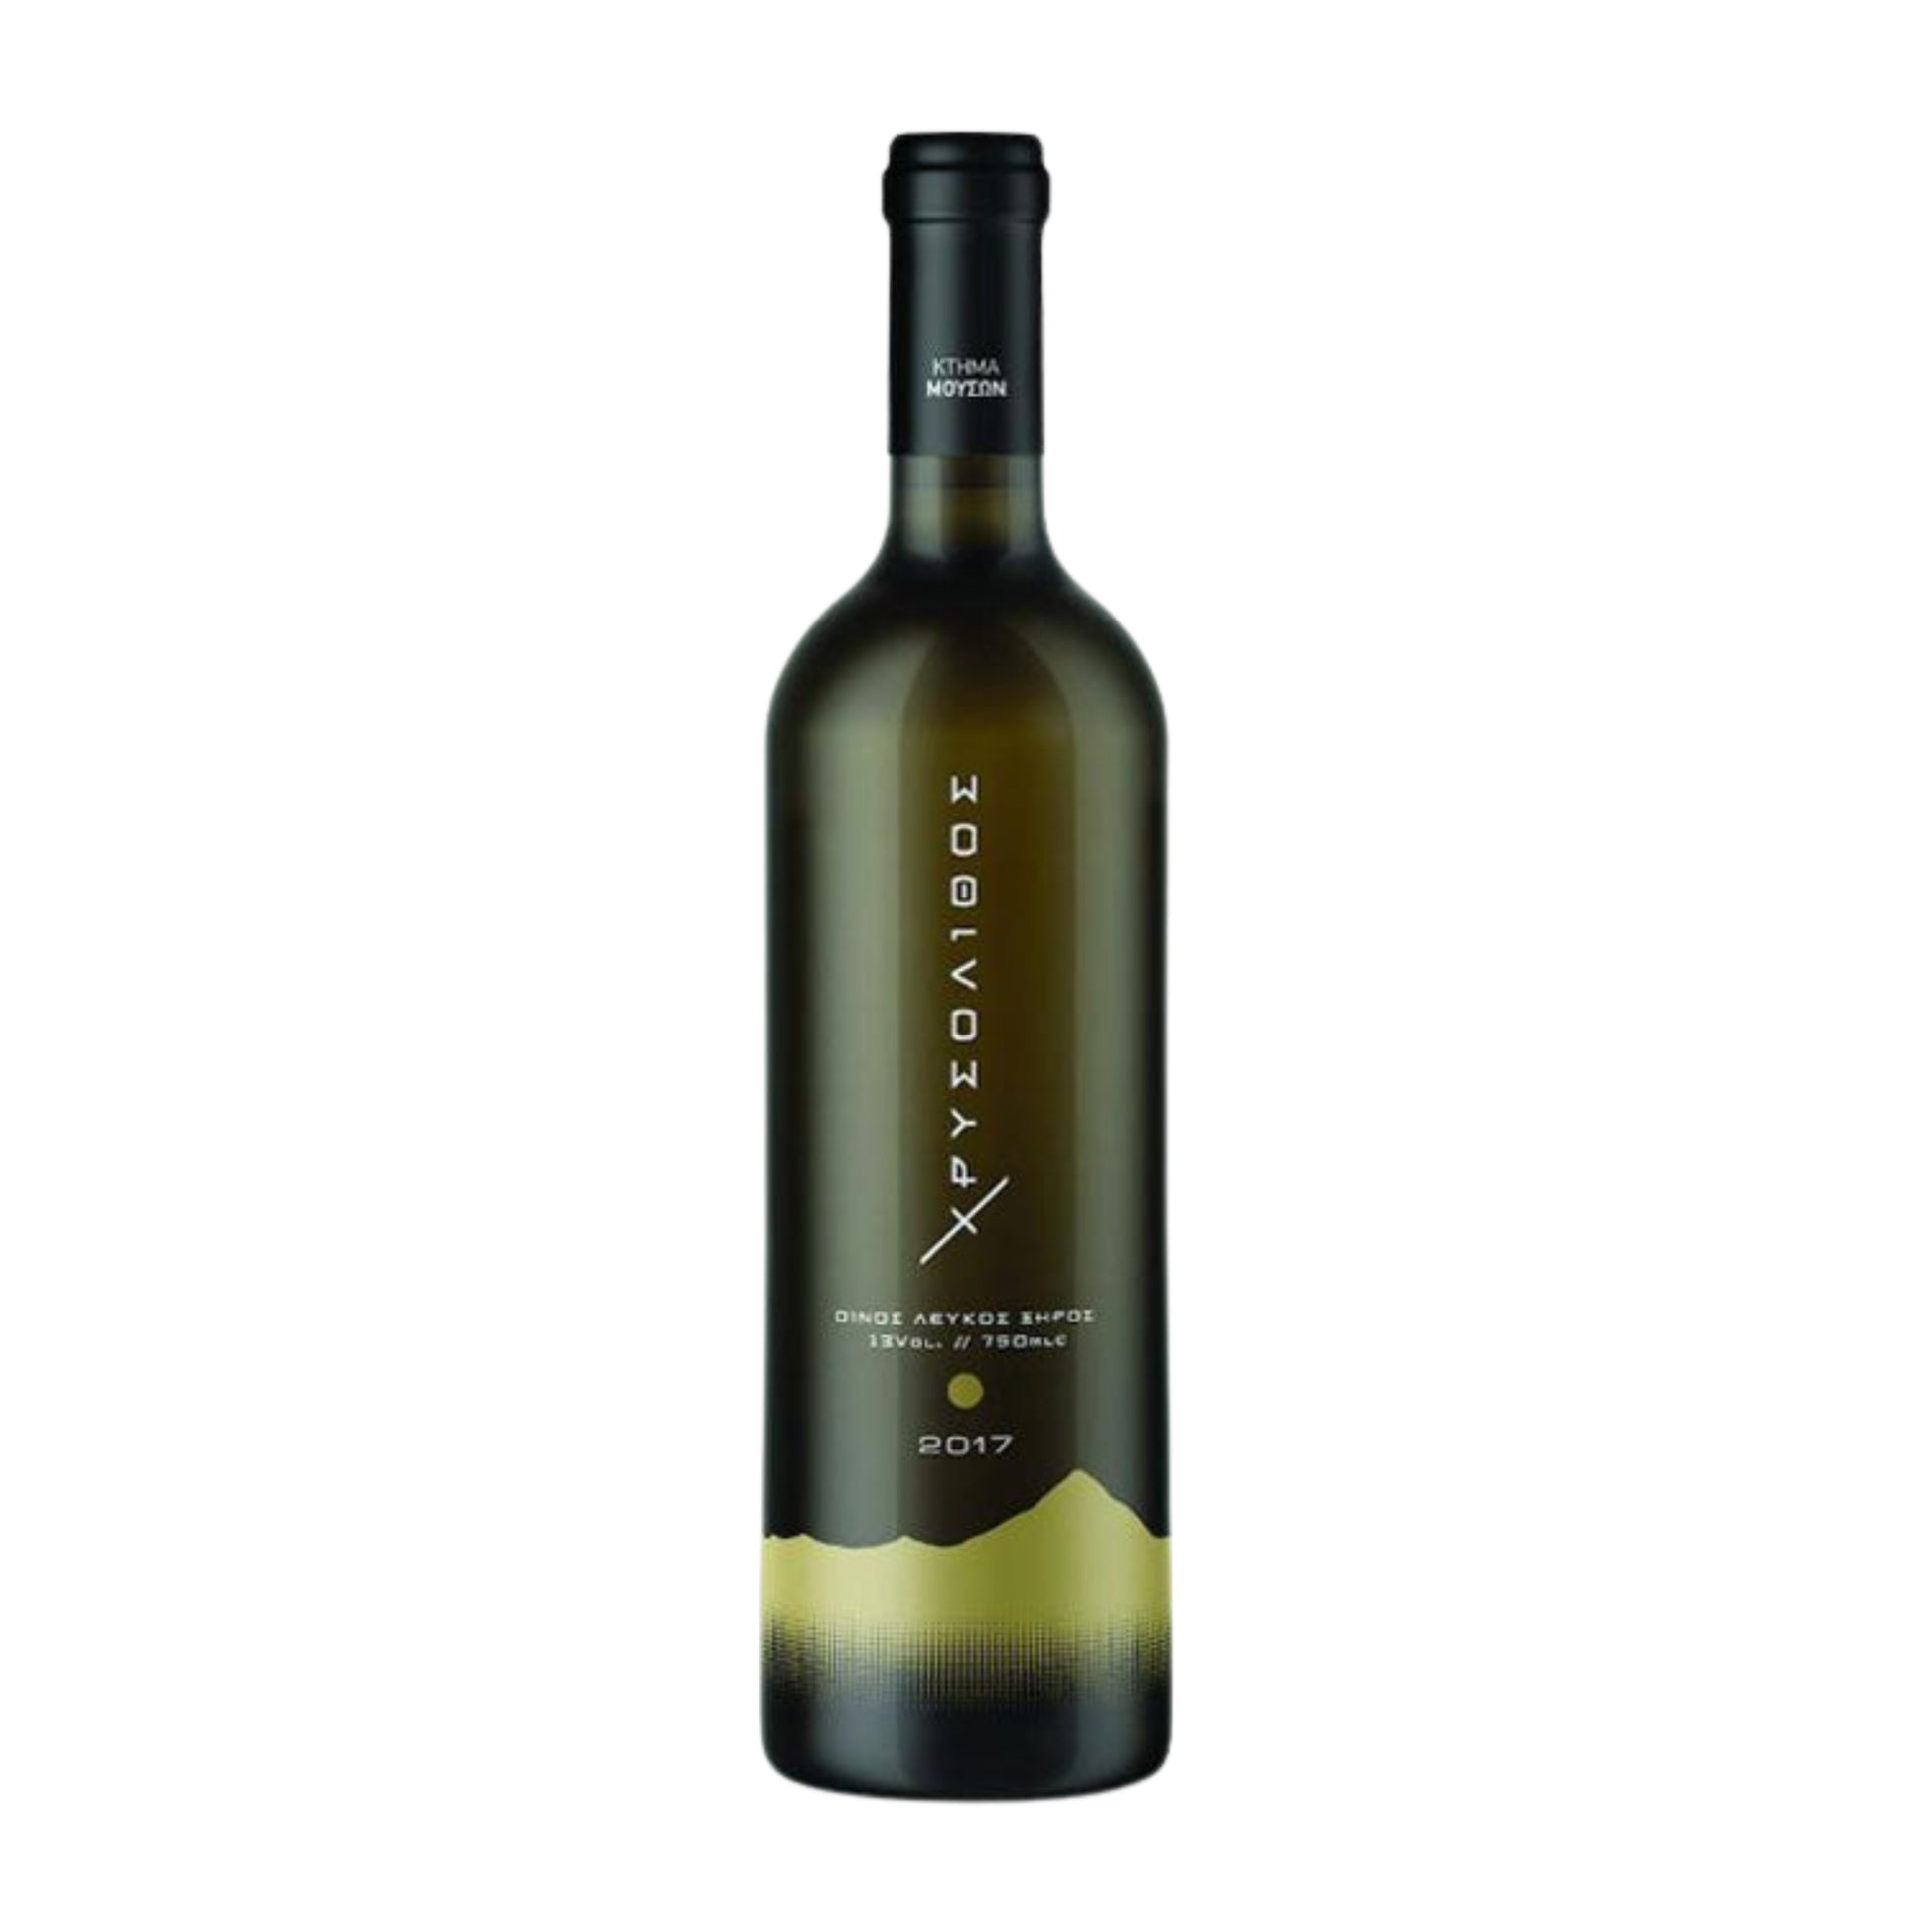 prodotti-greci-vino-chrisolithos-white-750ml-muses-estate